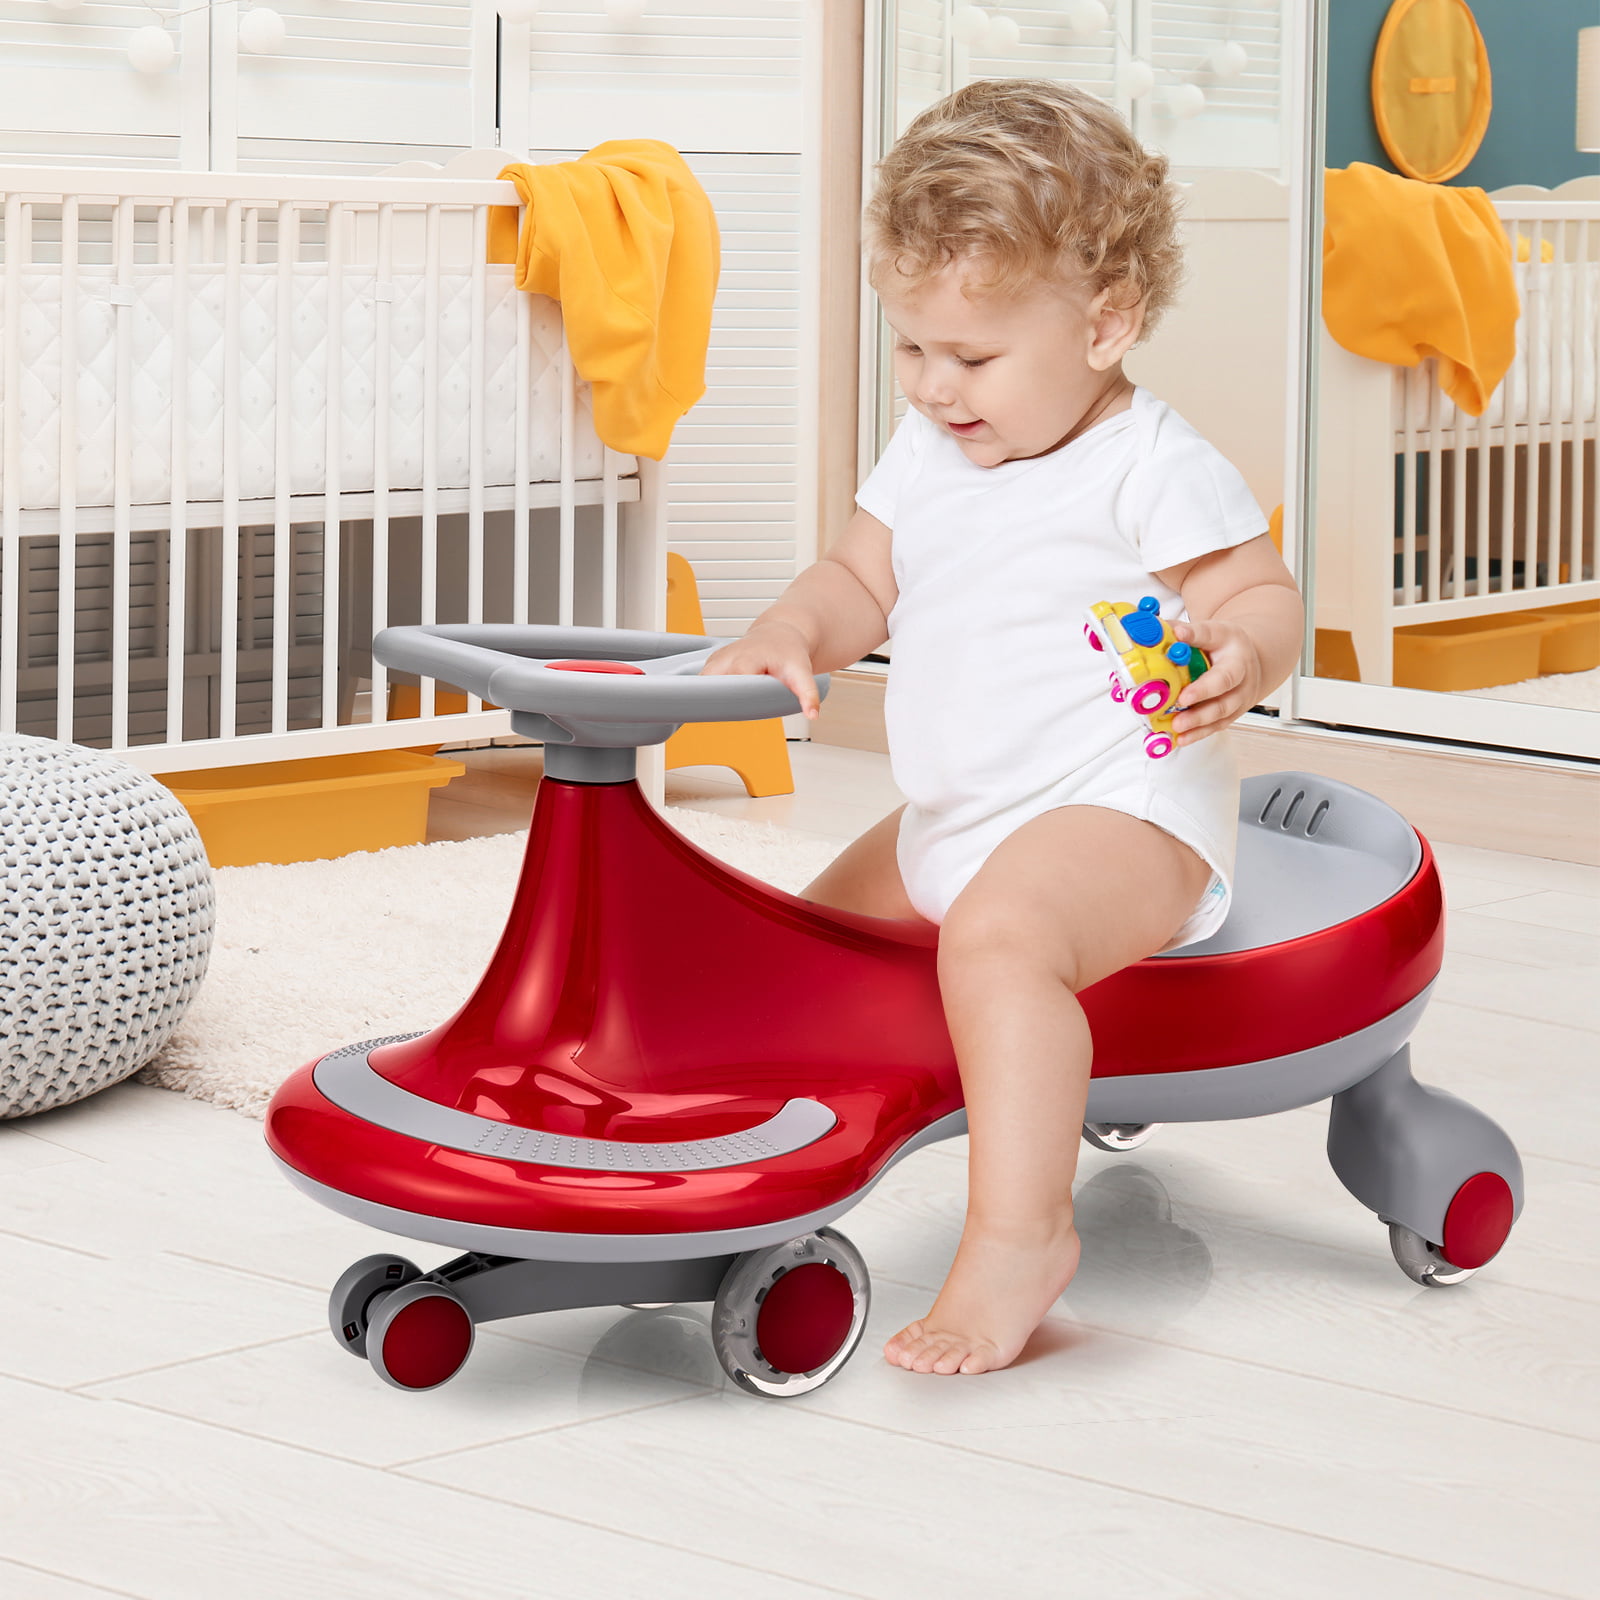 Wiggle Plasma Car Ride On Toy Toddler Children Exercise Fun Safe Boy Girl 